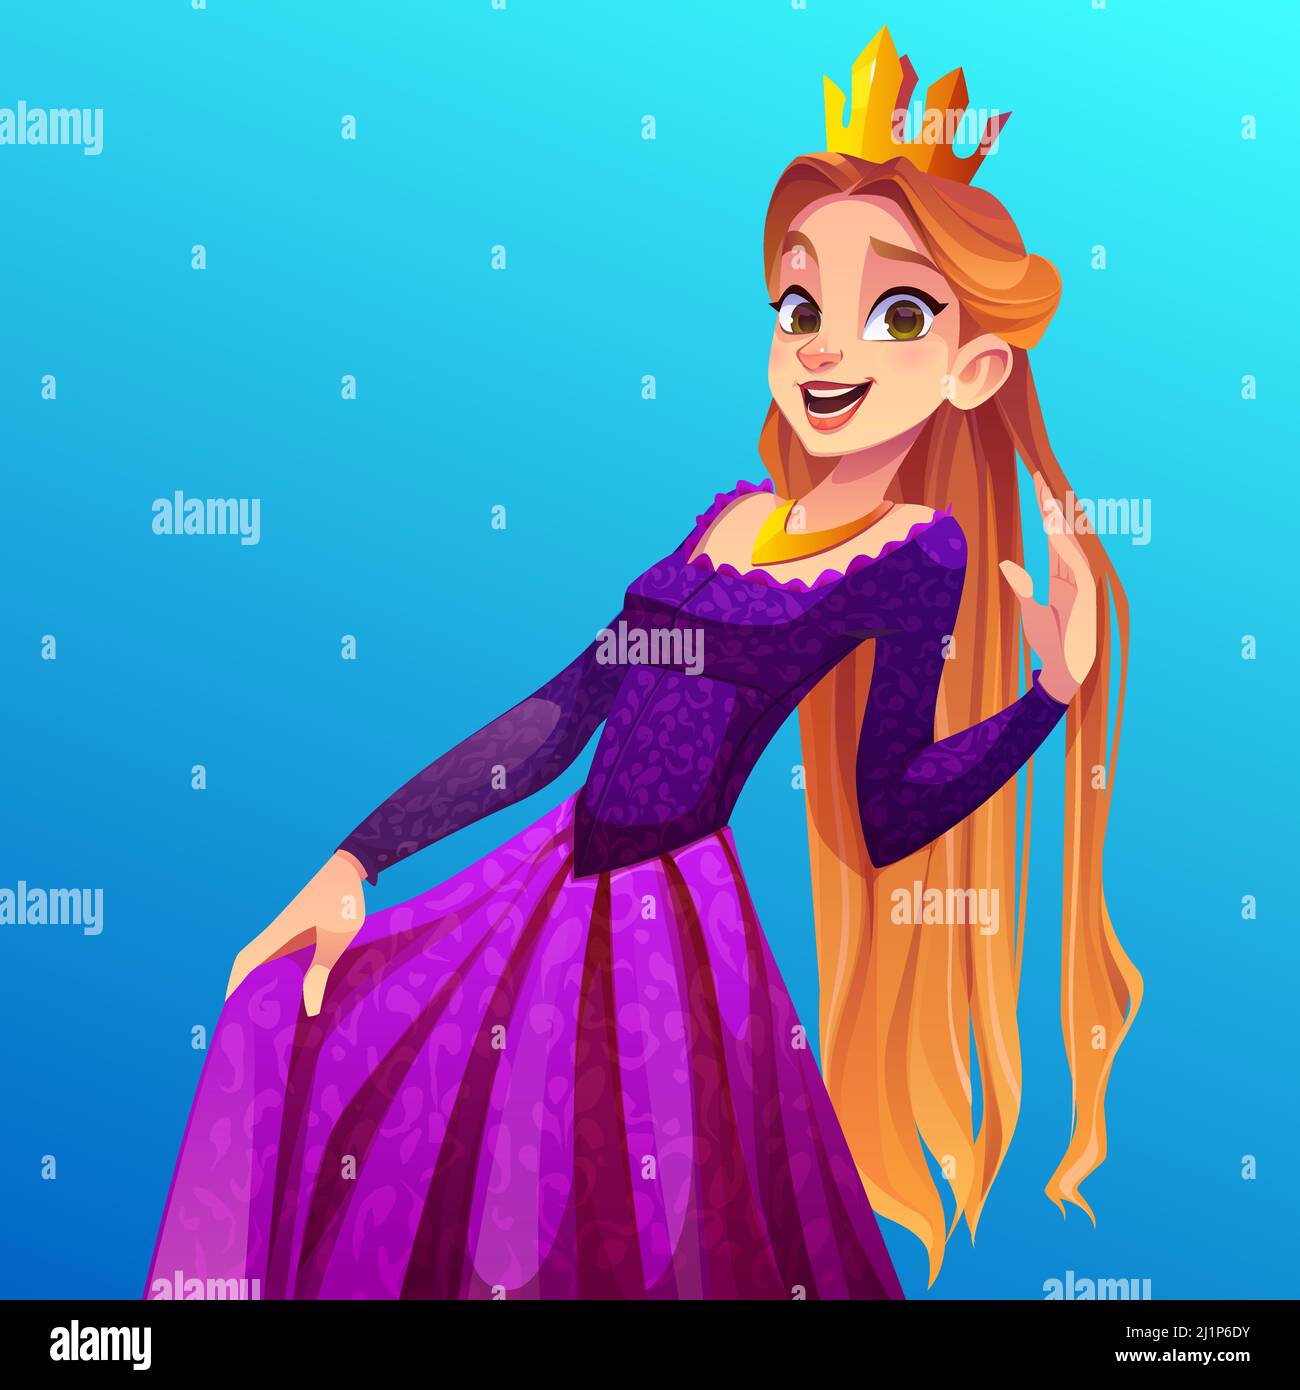 Buy Disney Princess Rapunzel Fairytale Hair Doll and Accessories  Dolls   Argos